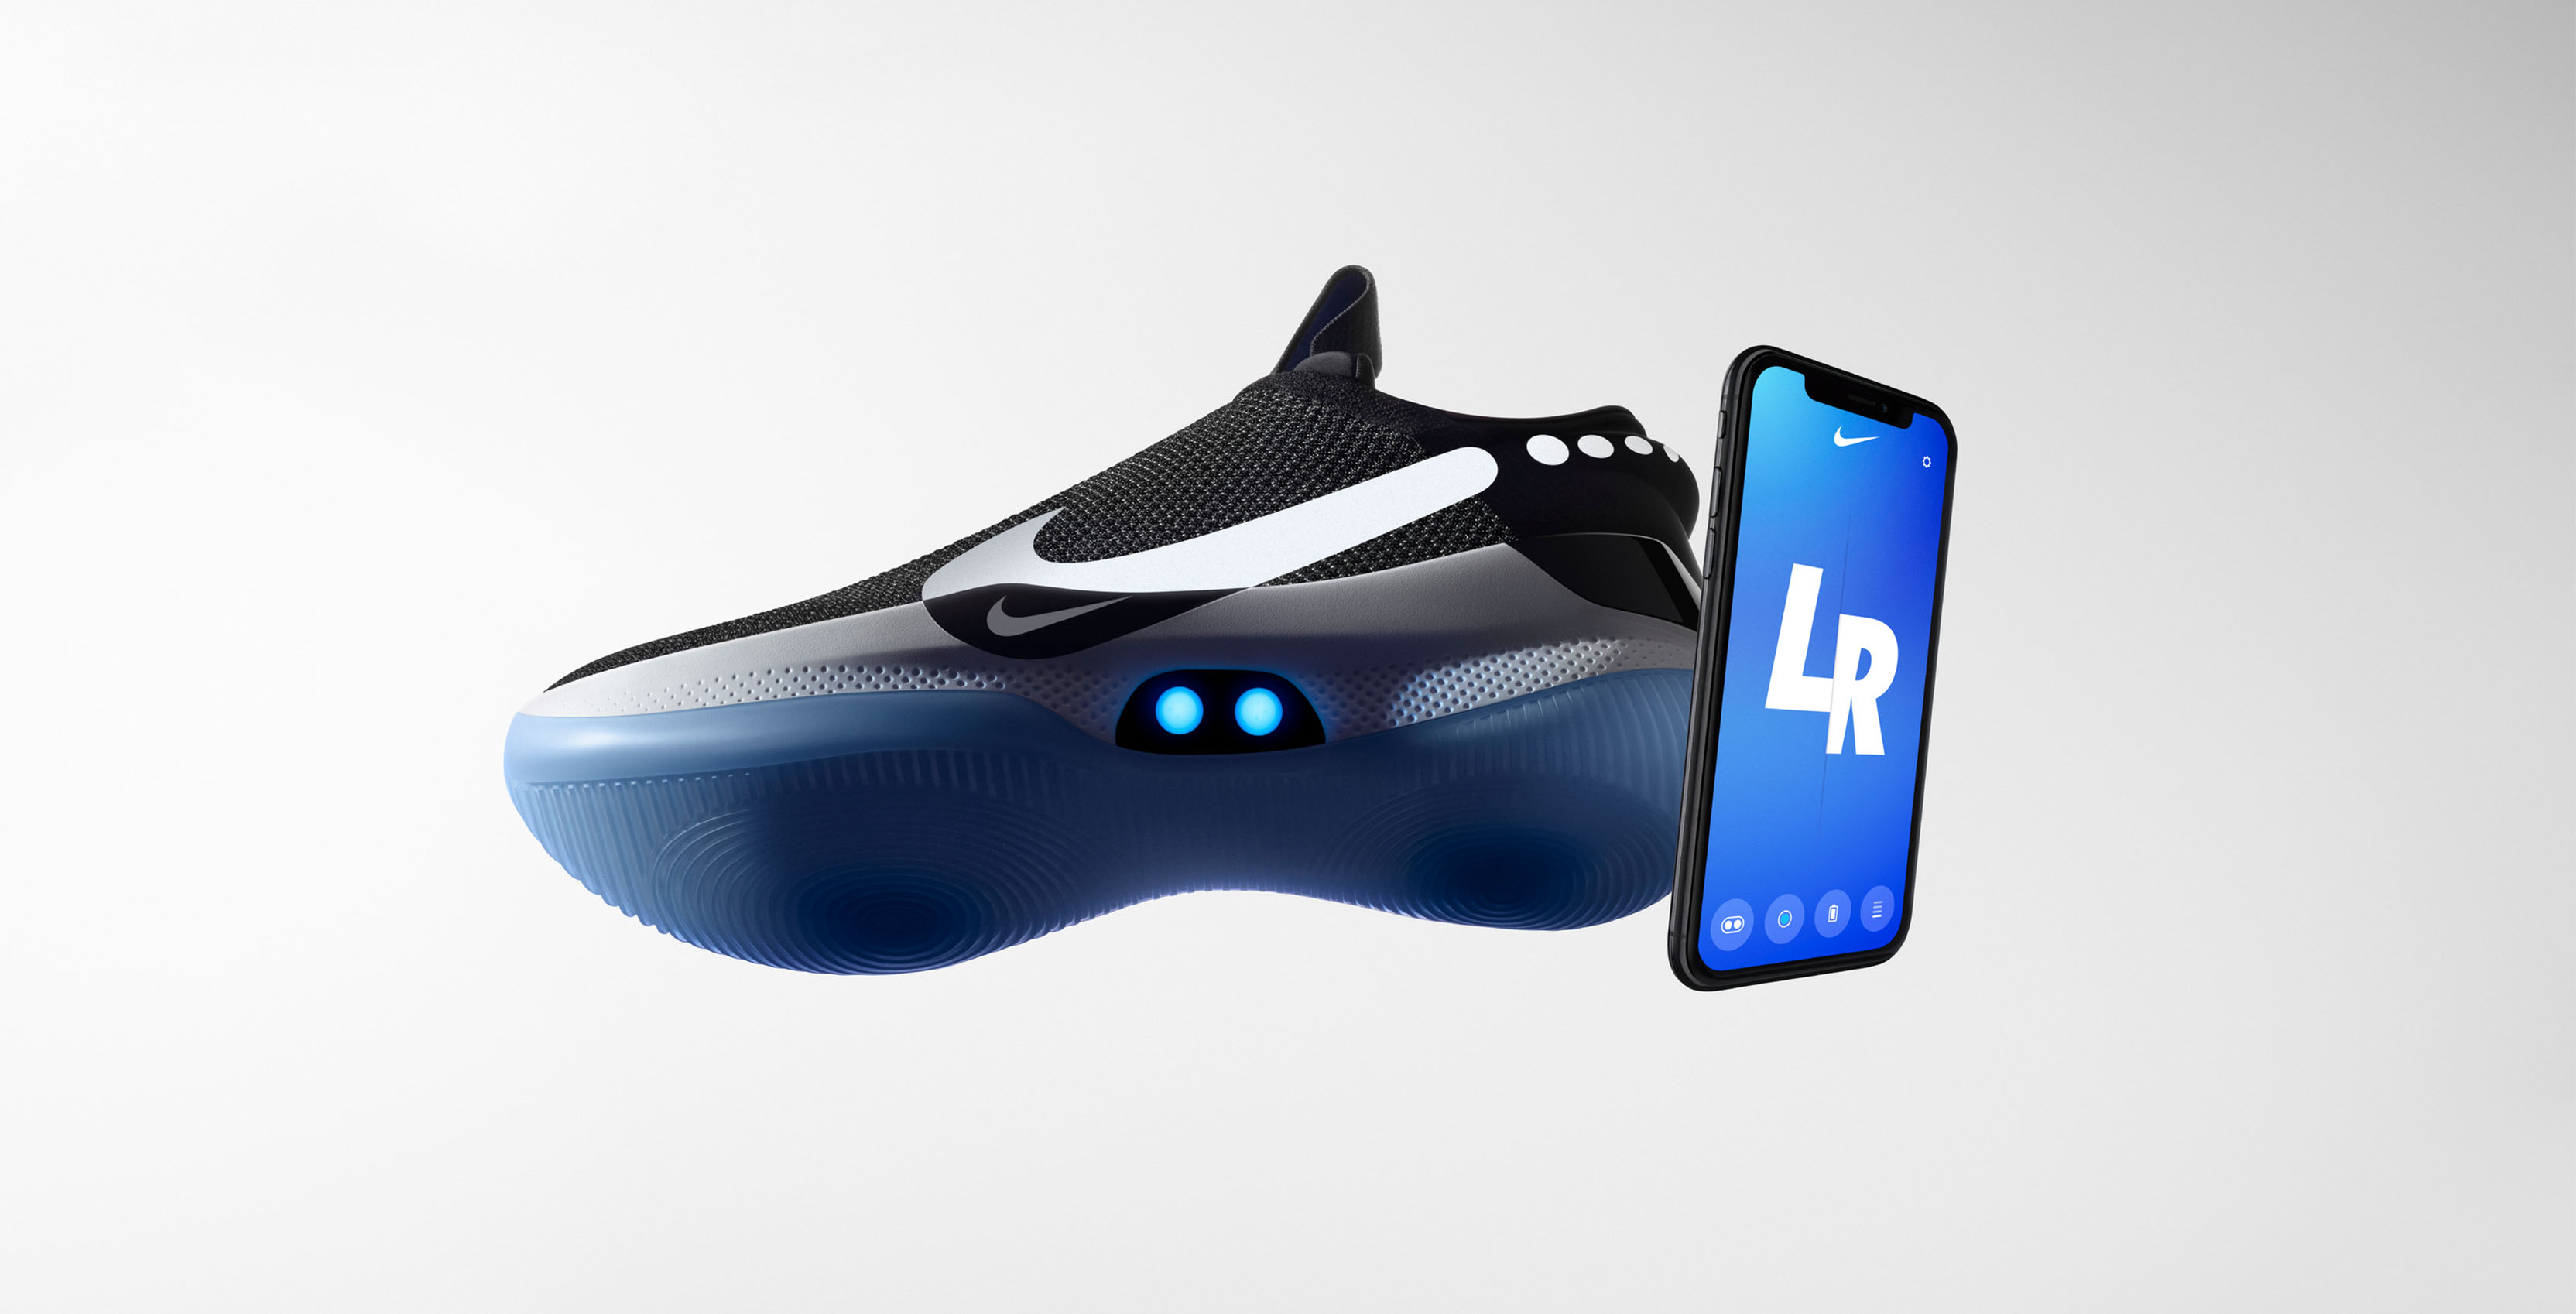 Nike Adapt BB and companion app